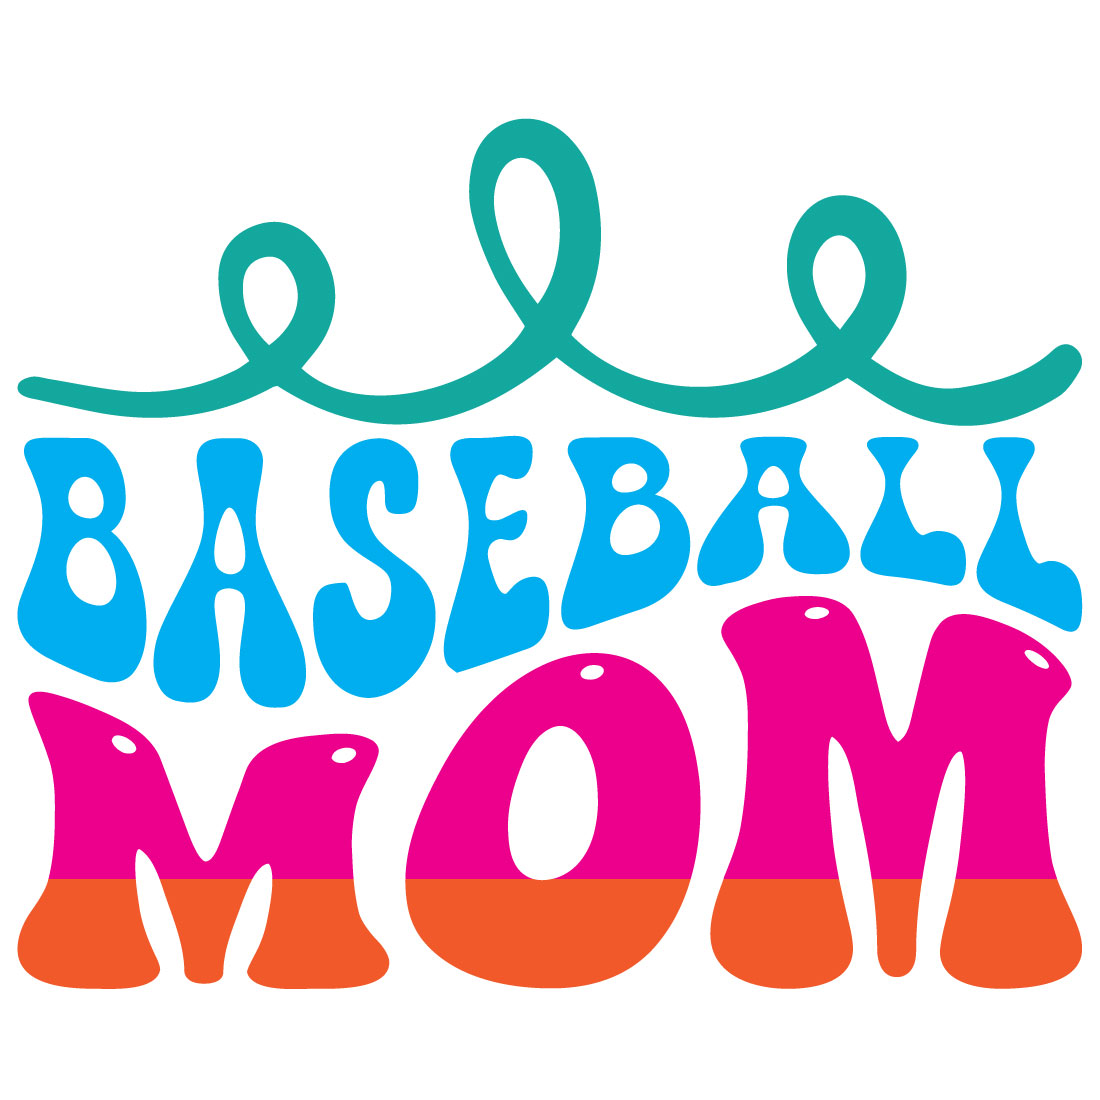 Baseball mom t shirt designs preview image.